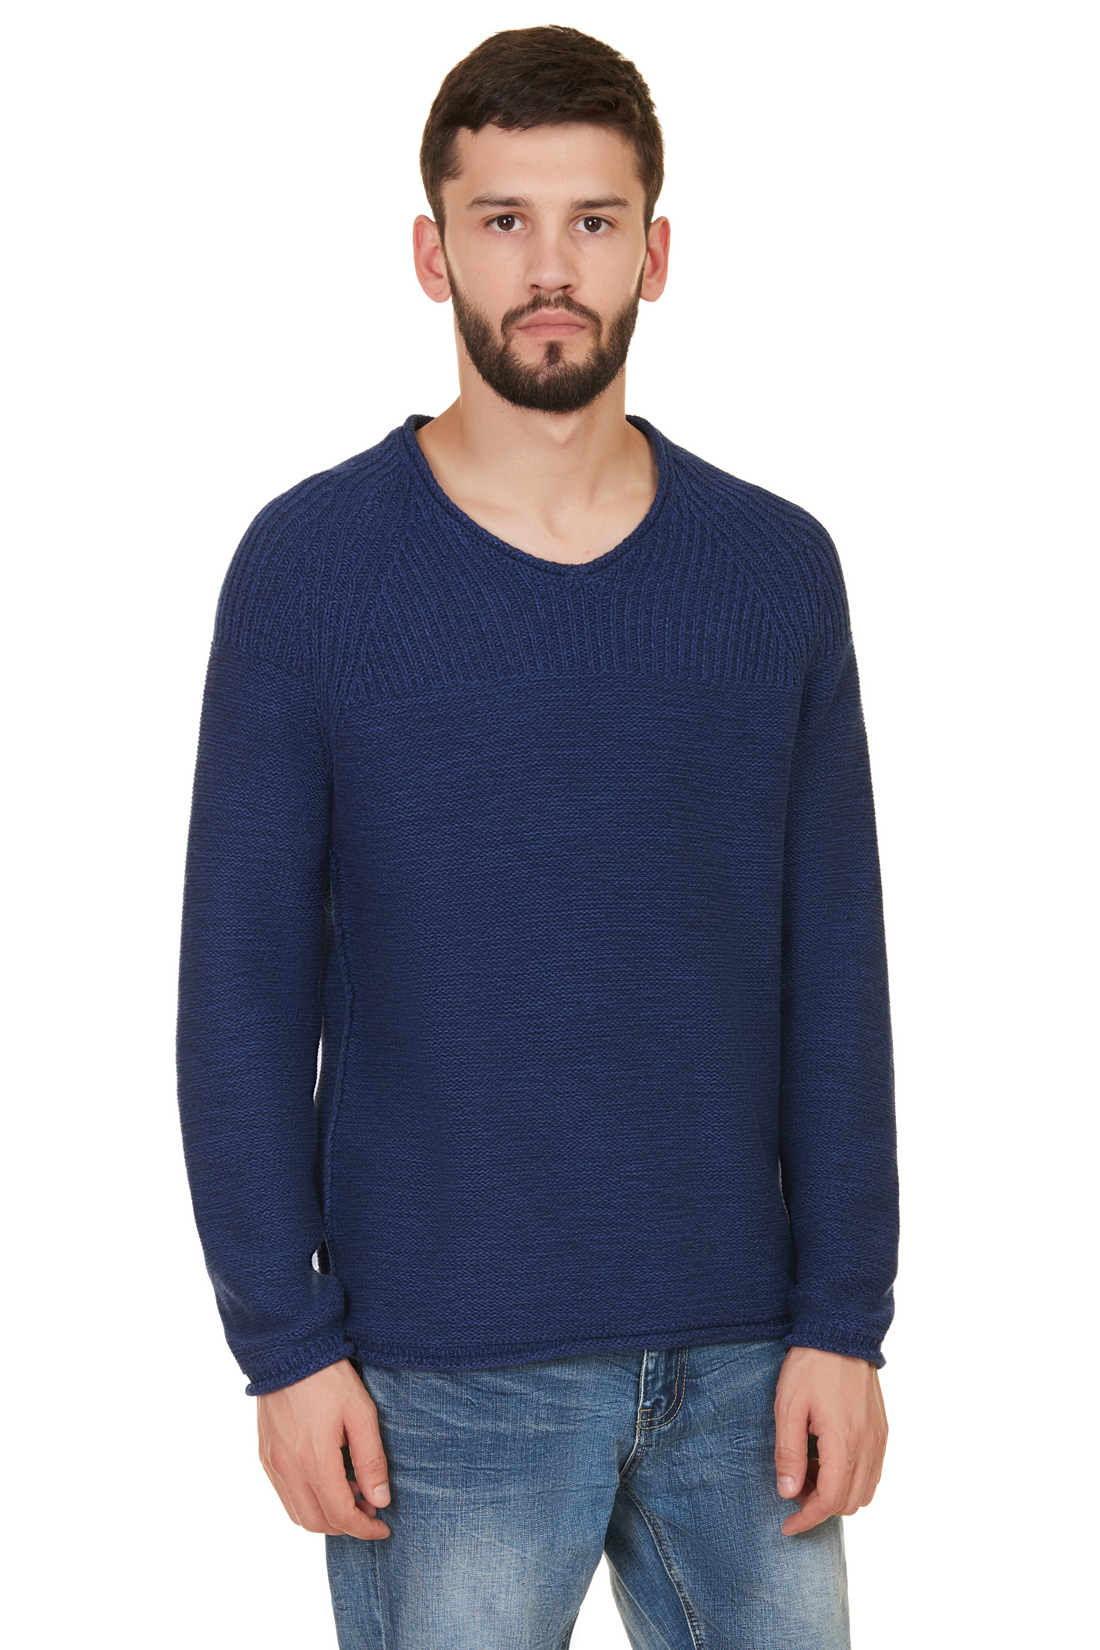 Пуловер из хлопка (арт. baon B637520), размер XXL, цвет deep navy melange#синий Пуловер из хлопка (арт. baon B637520) - фото 1